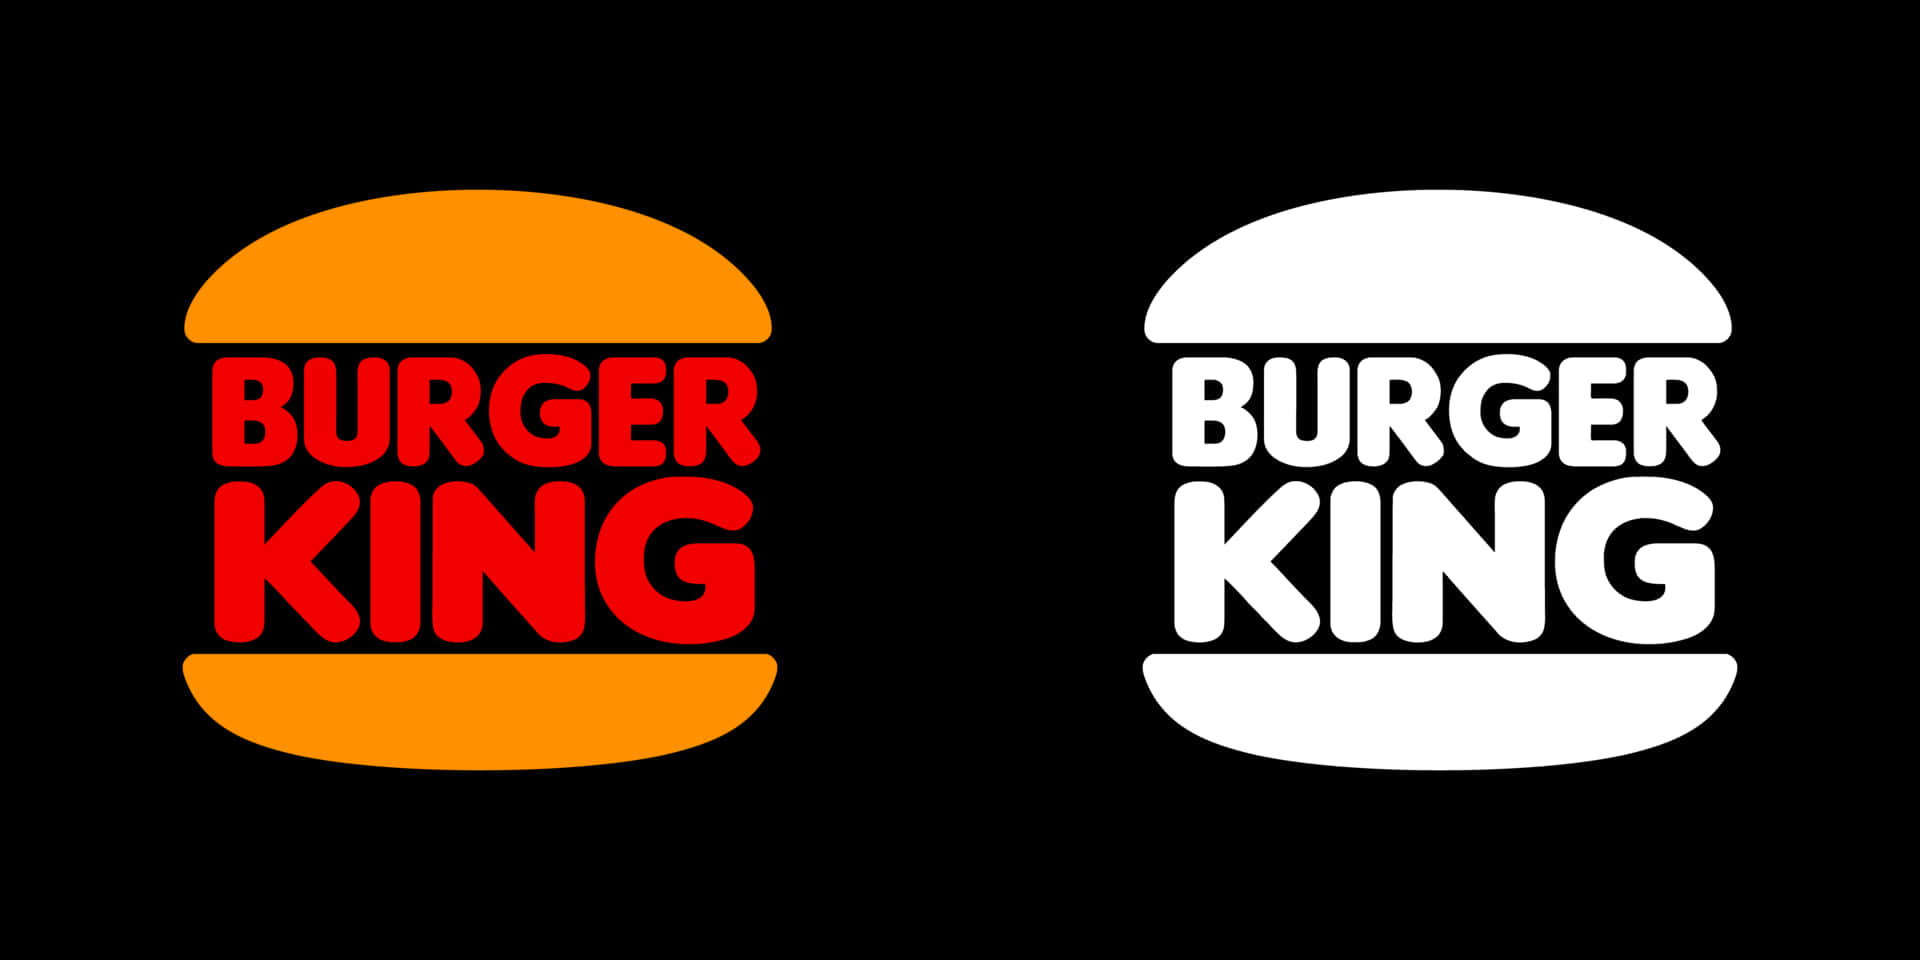 Enjoy the delicious tastes of Burger King!